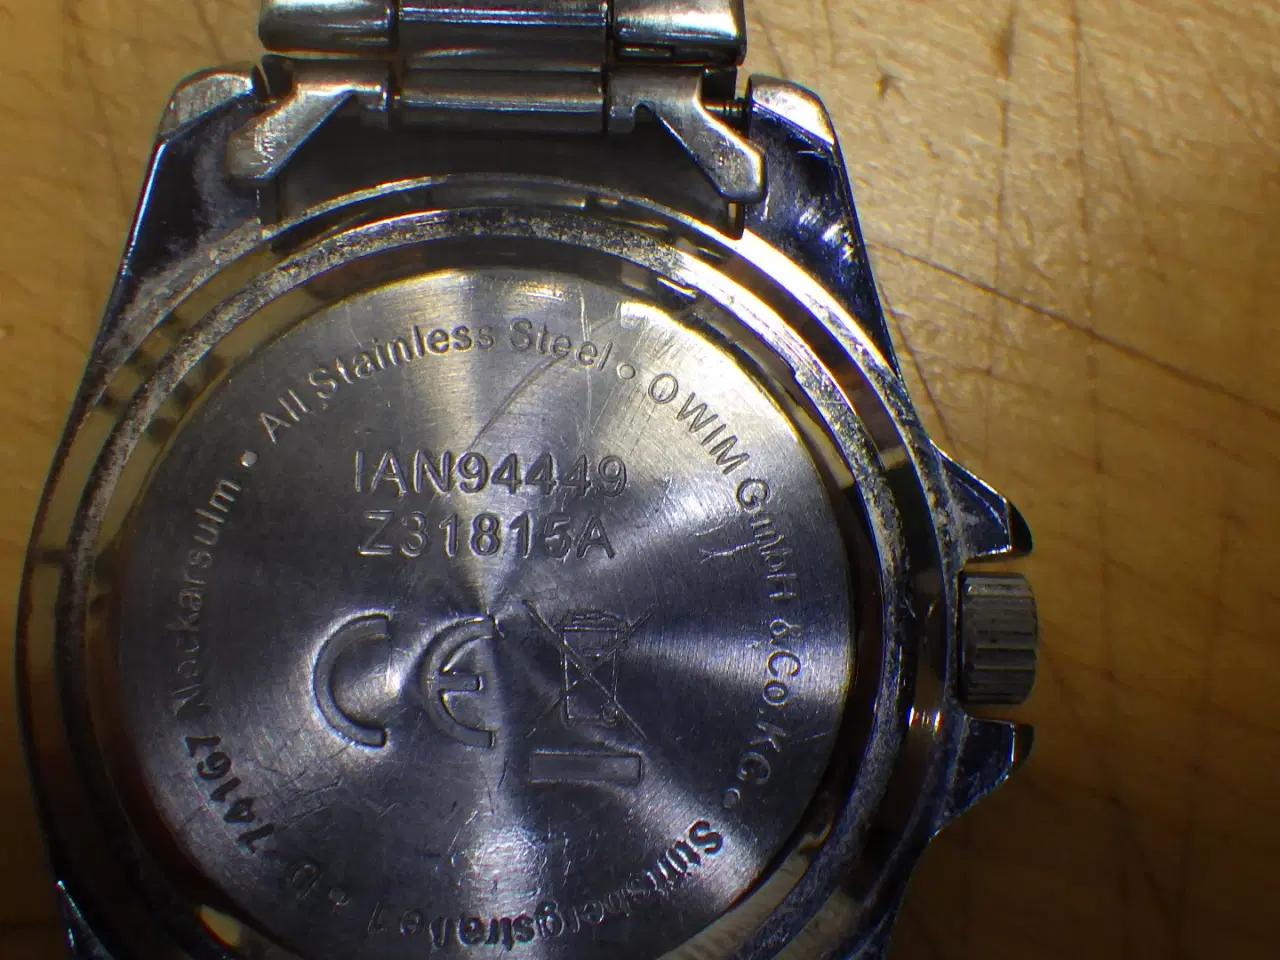 Billede 5 - OWIM herreur Z31815A tysk kvalitets ur